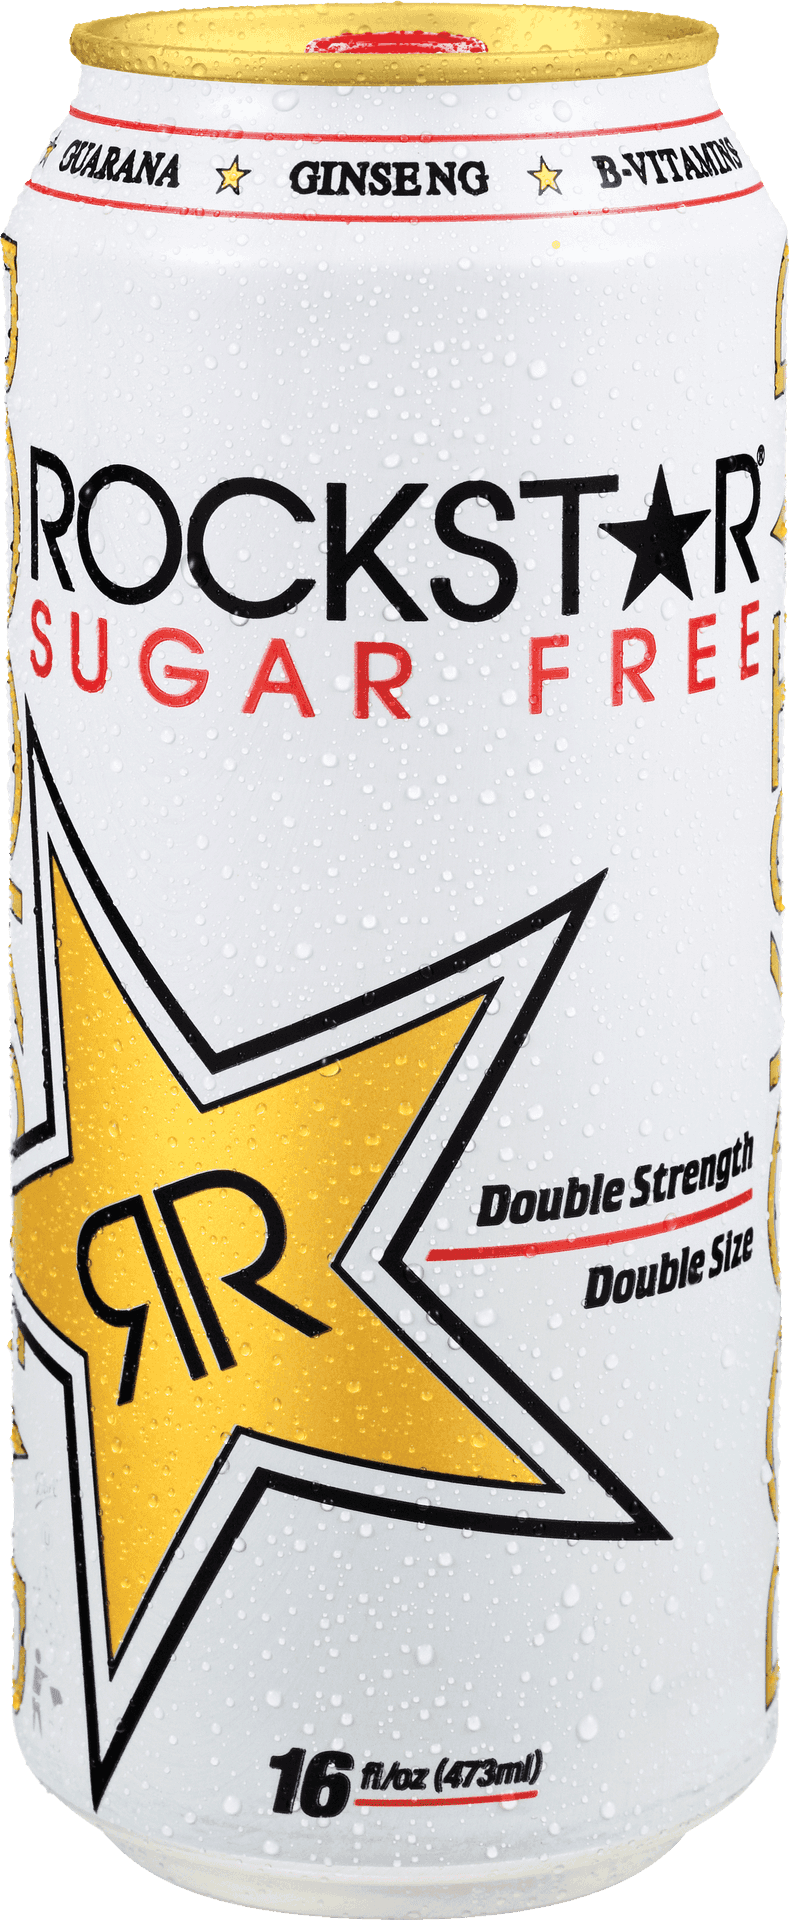 Rockstar Sugar Free Energy Drink Can PNG image